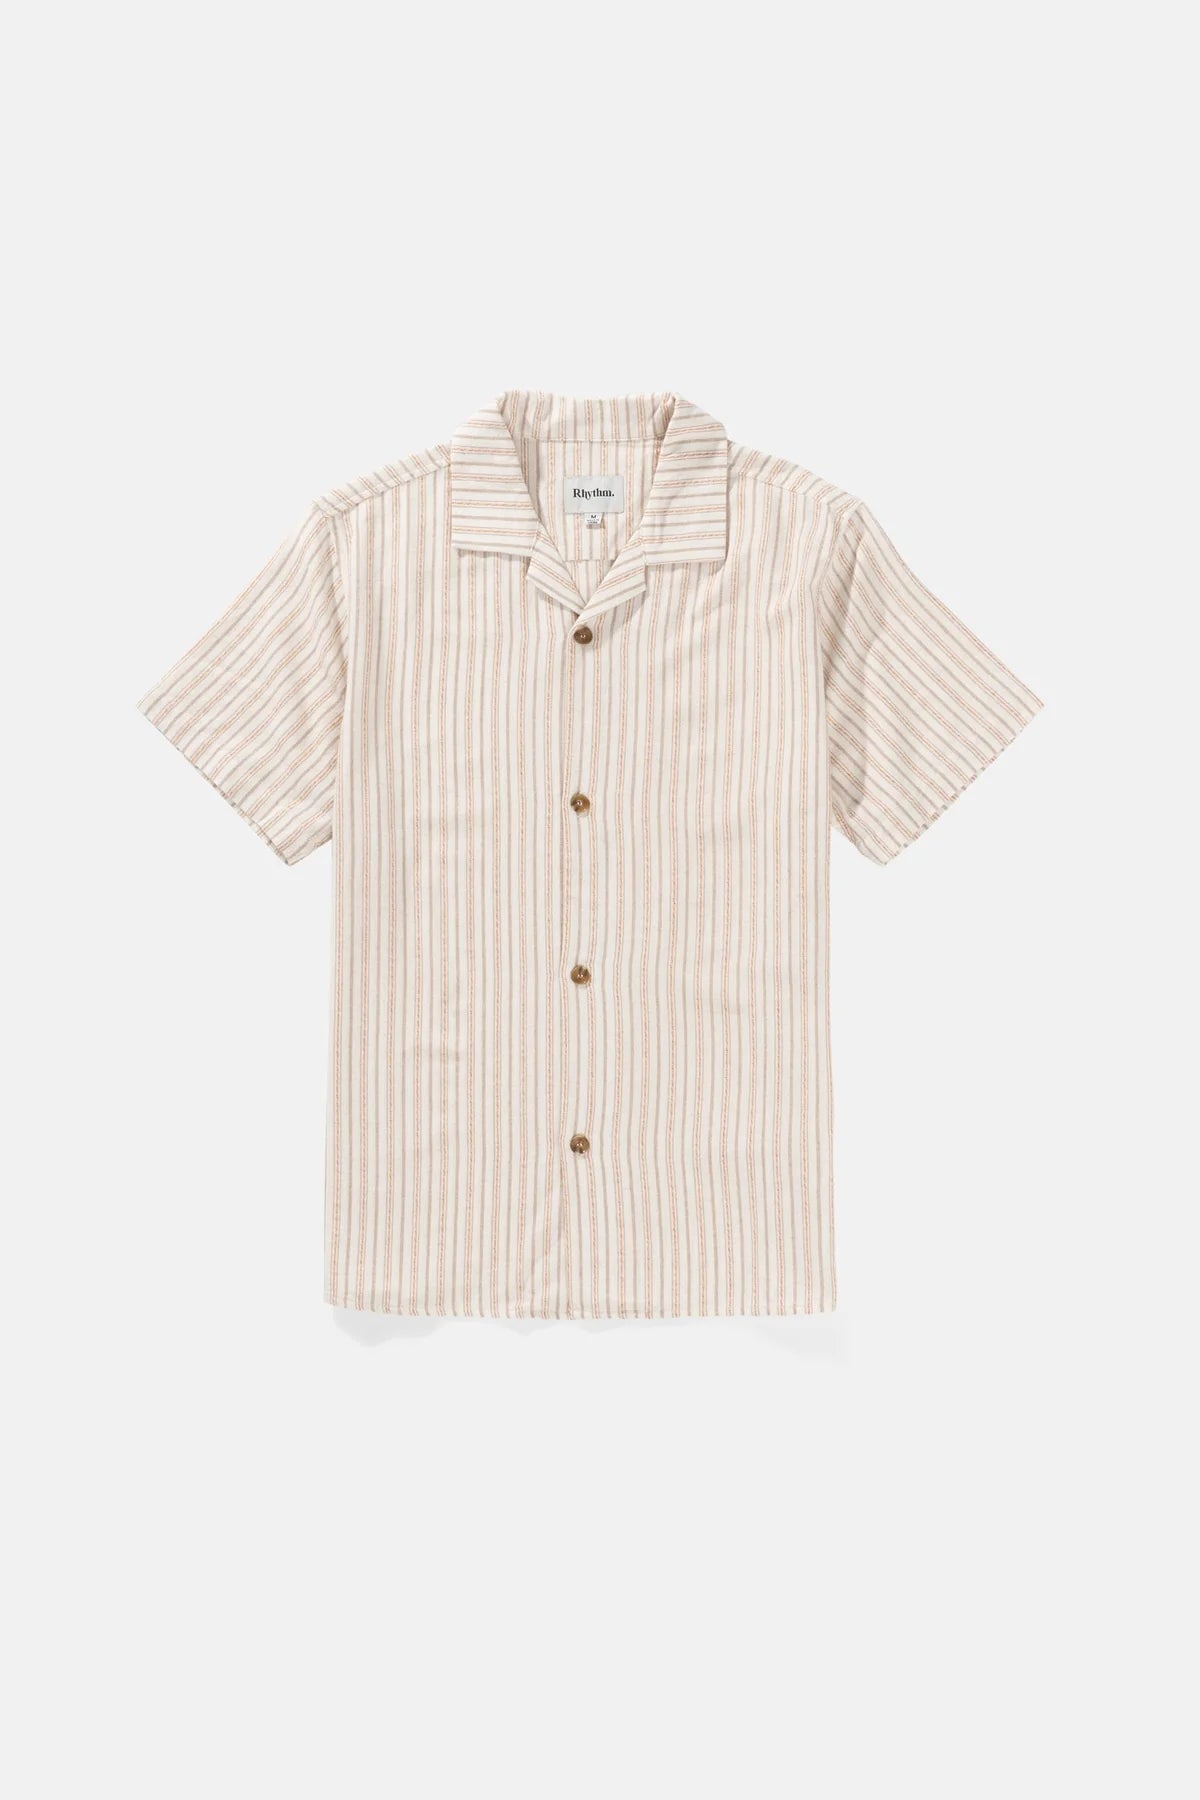 Rhythm Vacation Stripe Ss Shirt - Natural